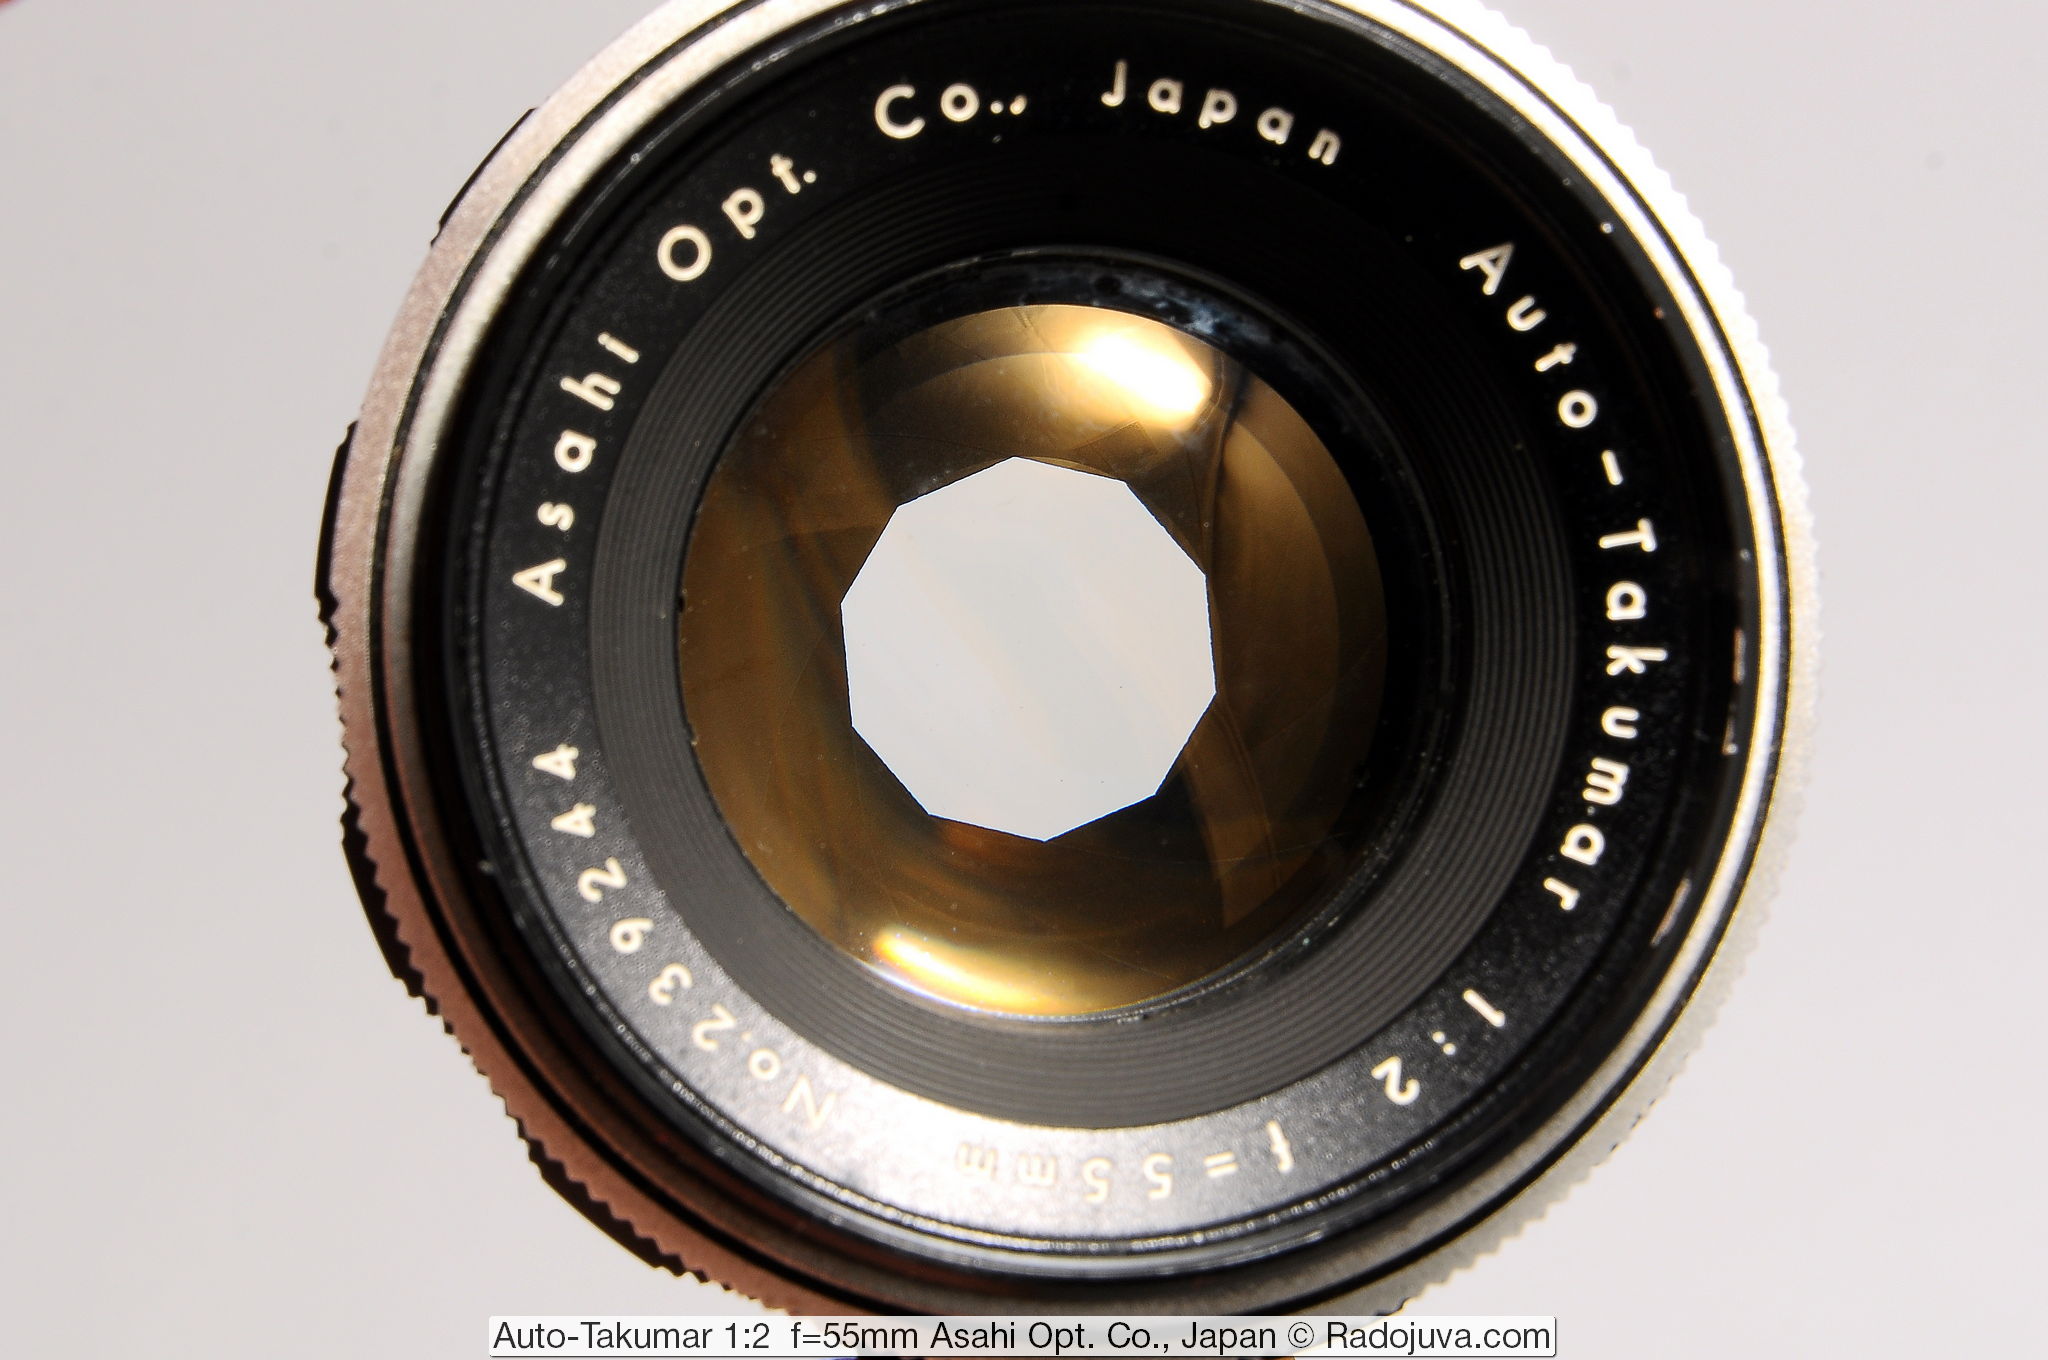 Auto-Takumar 1: 2 f = 55mm Asahi Opt. Co., Japan